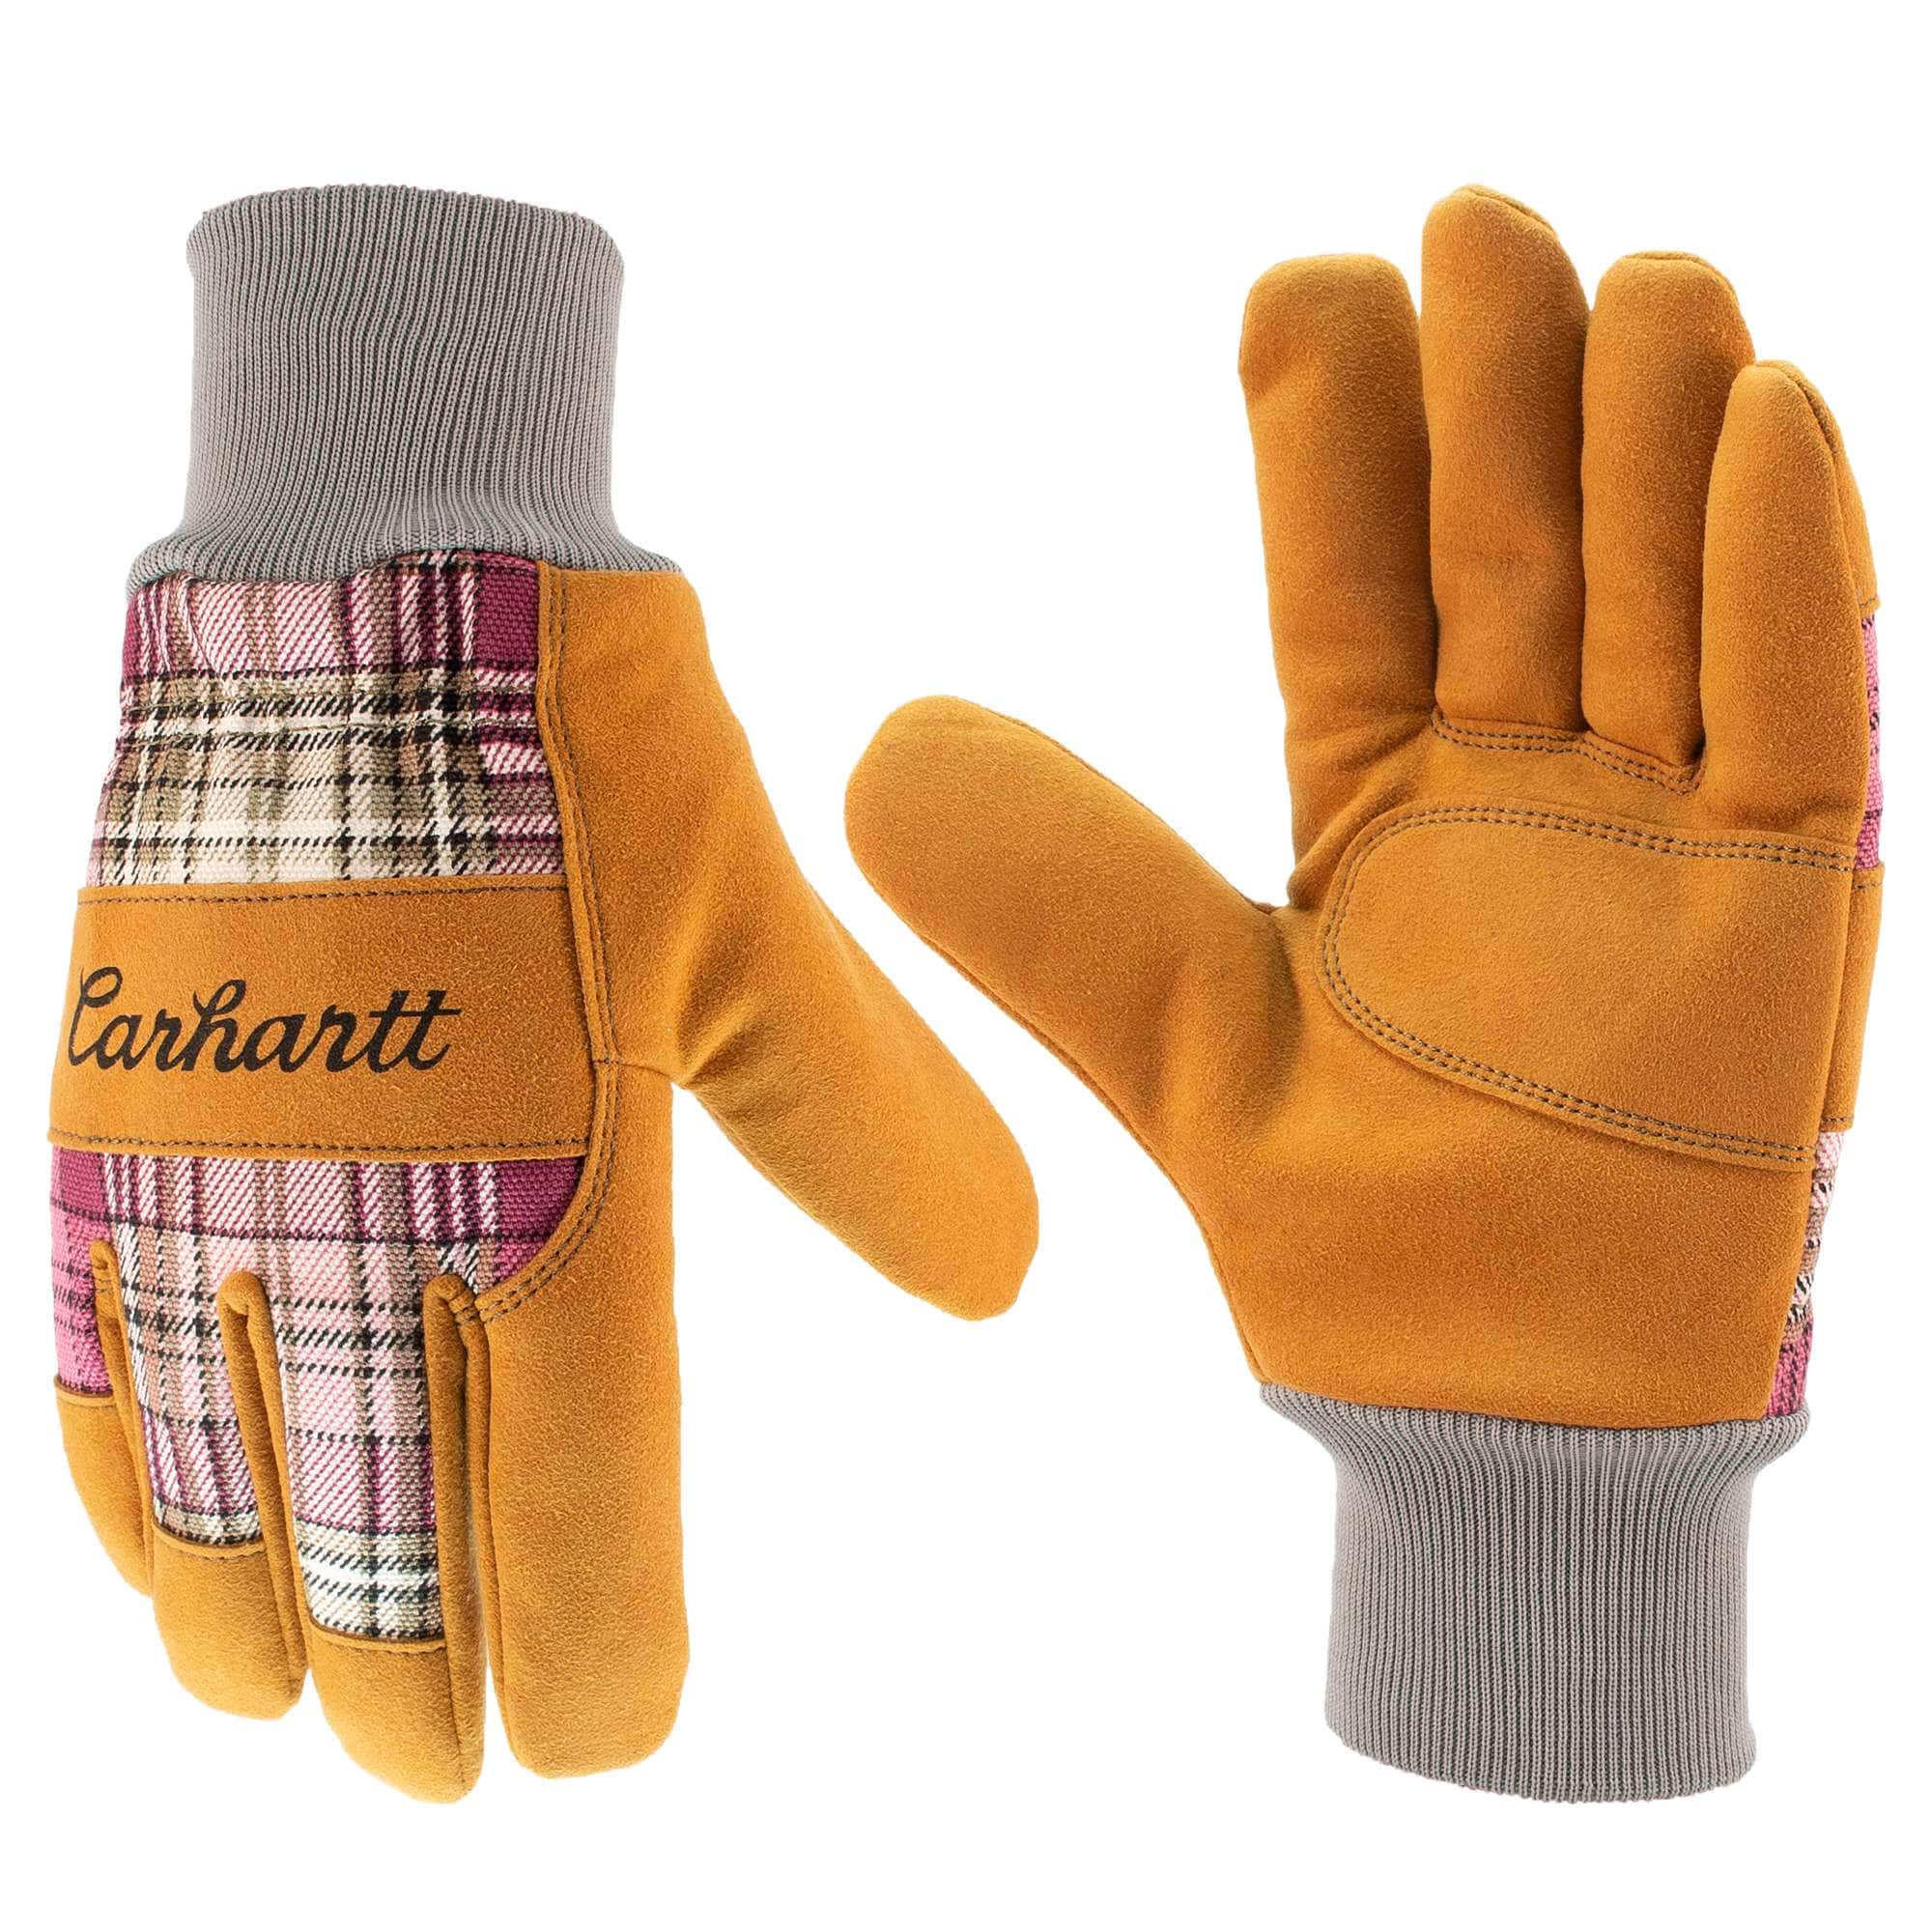 Carhartt Women's The Dex II High Dexterity Glove